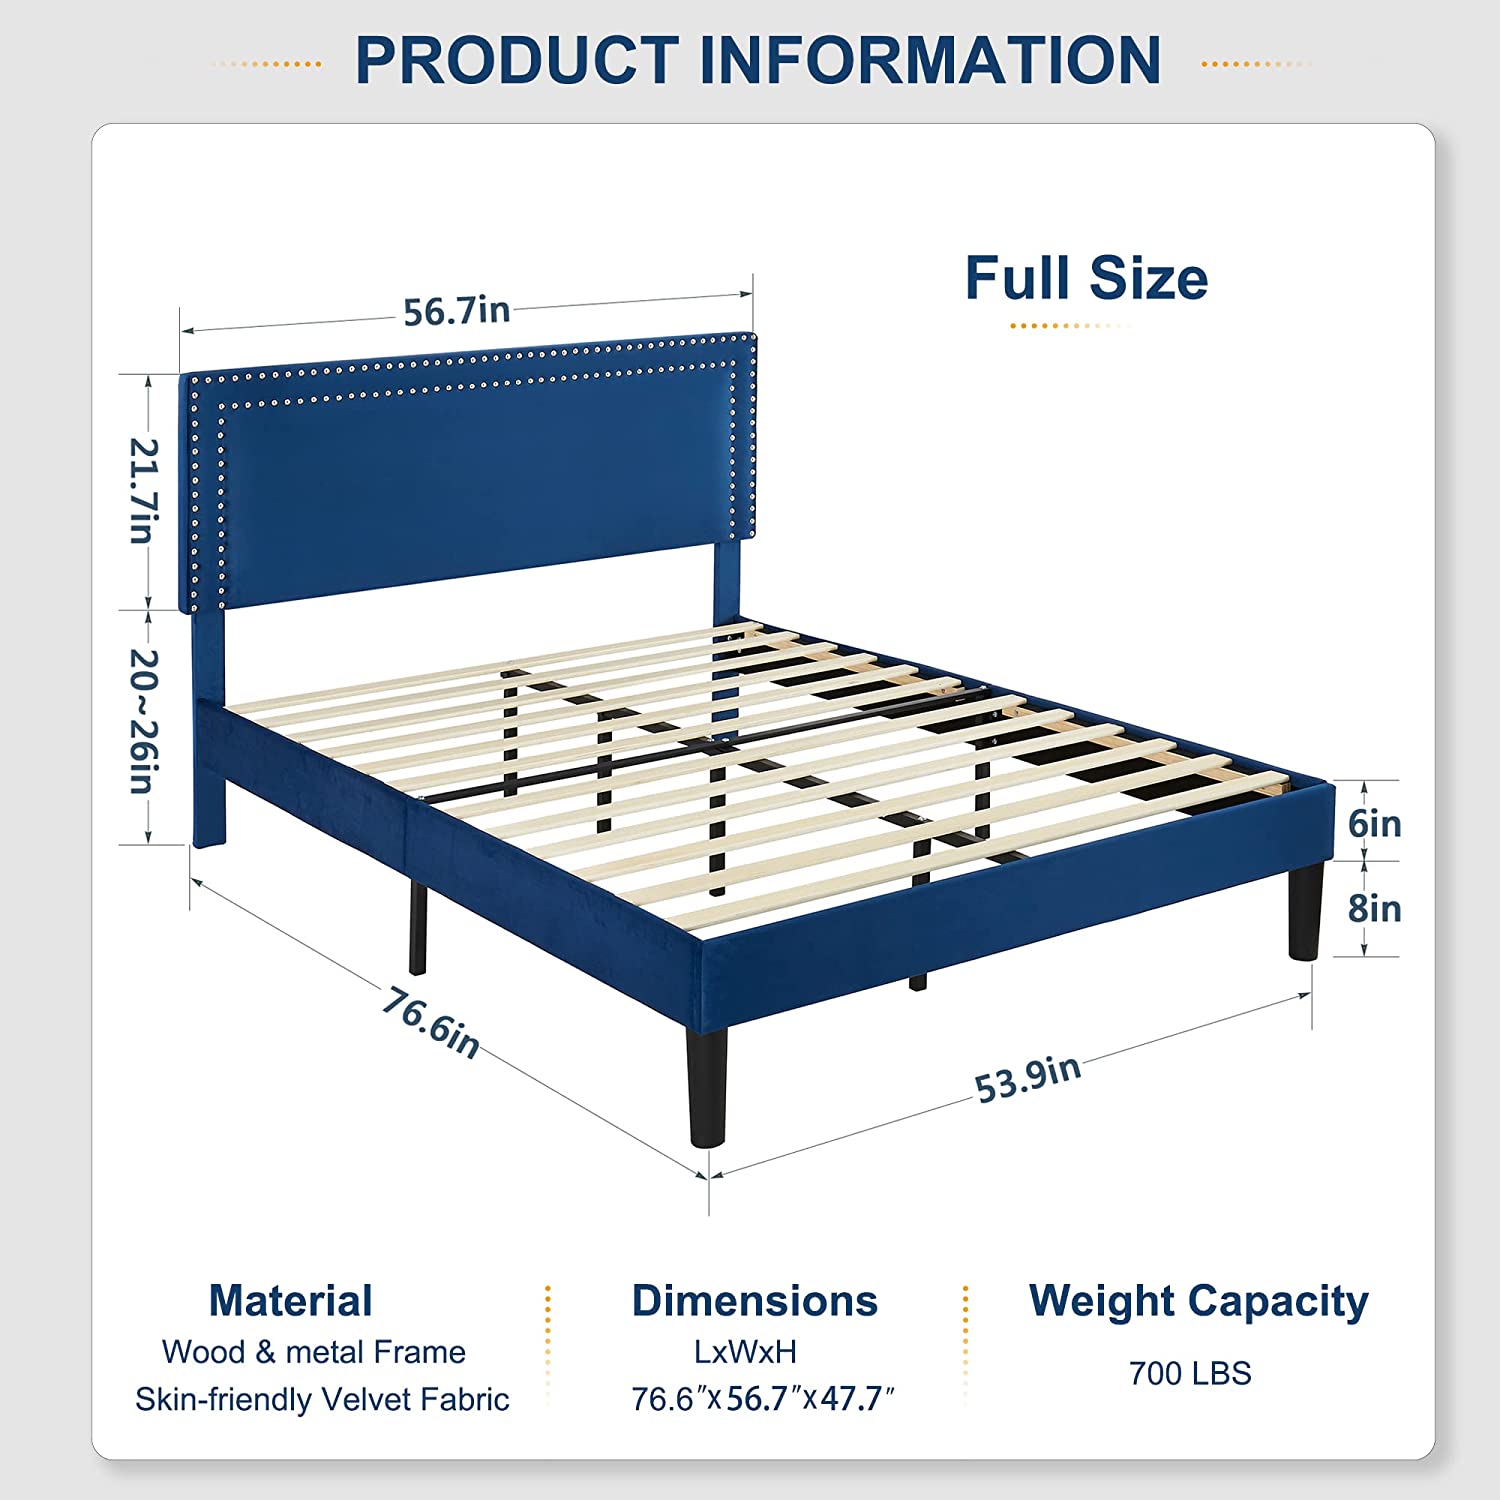 VECELO Modern Platform Bed Frame/Mattress Foundation with Height Adjustable Upholstered Headboard